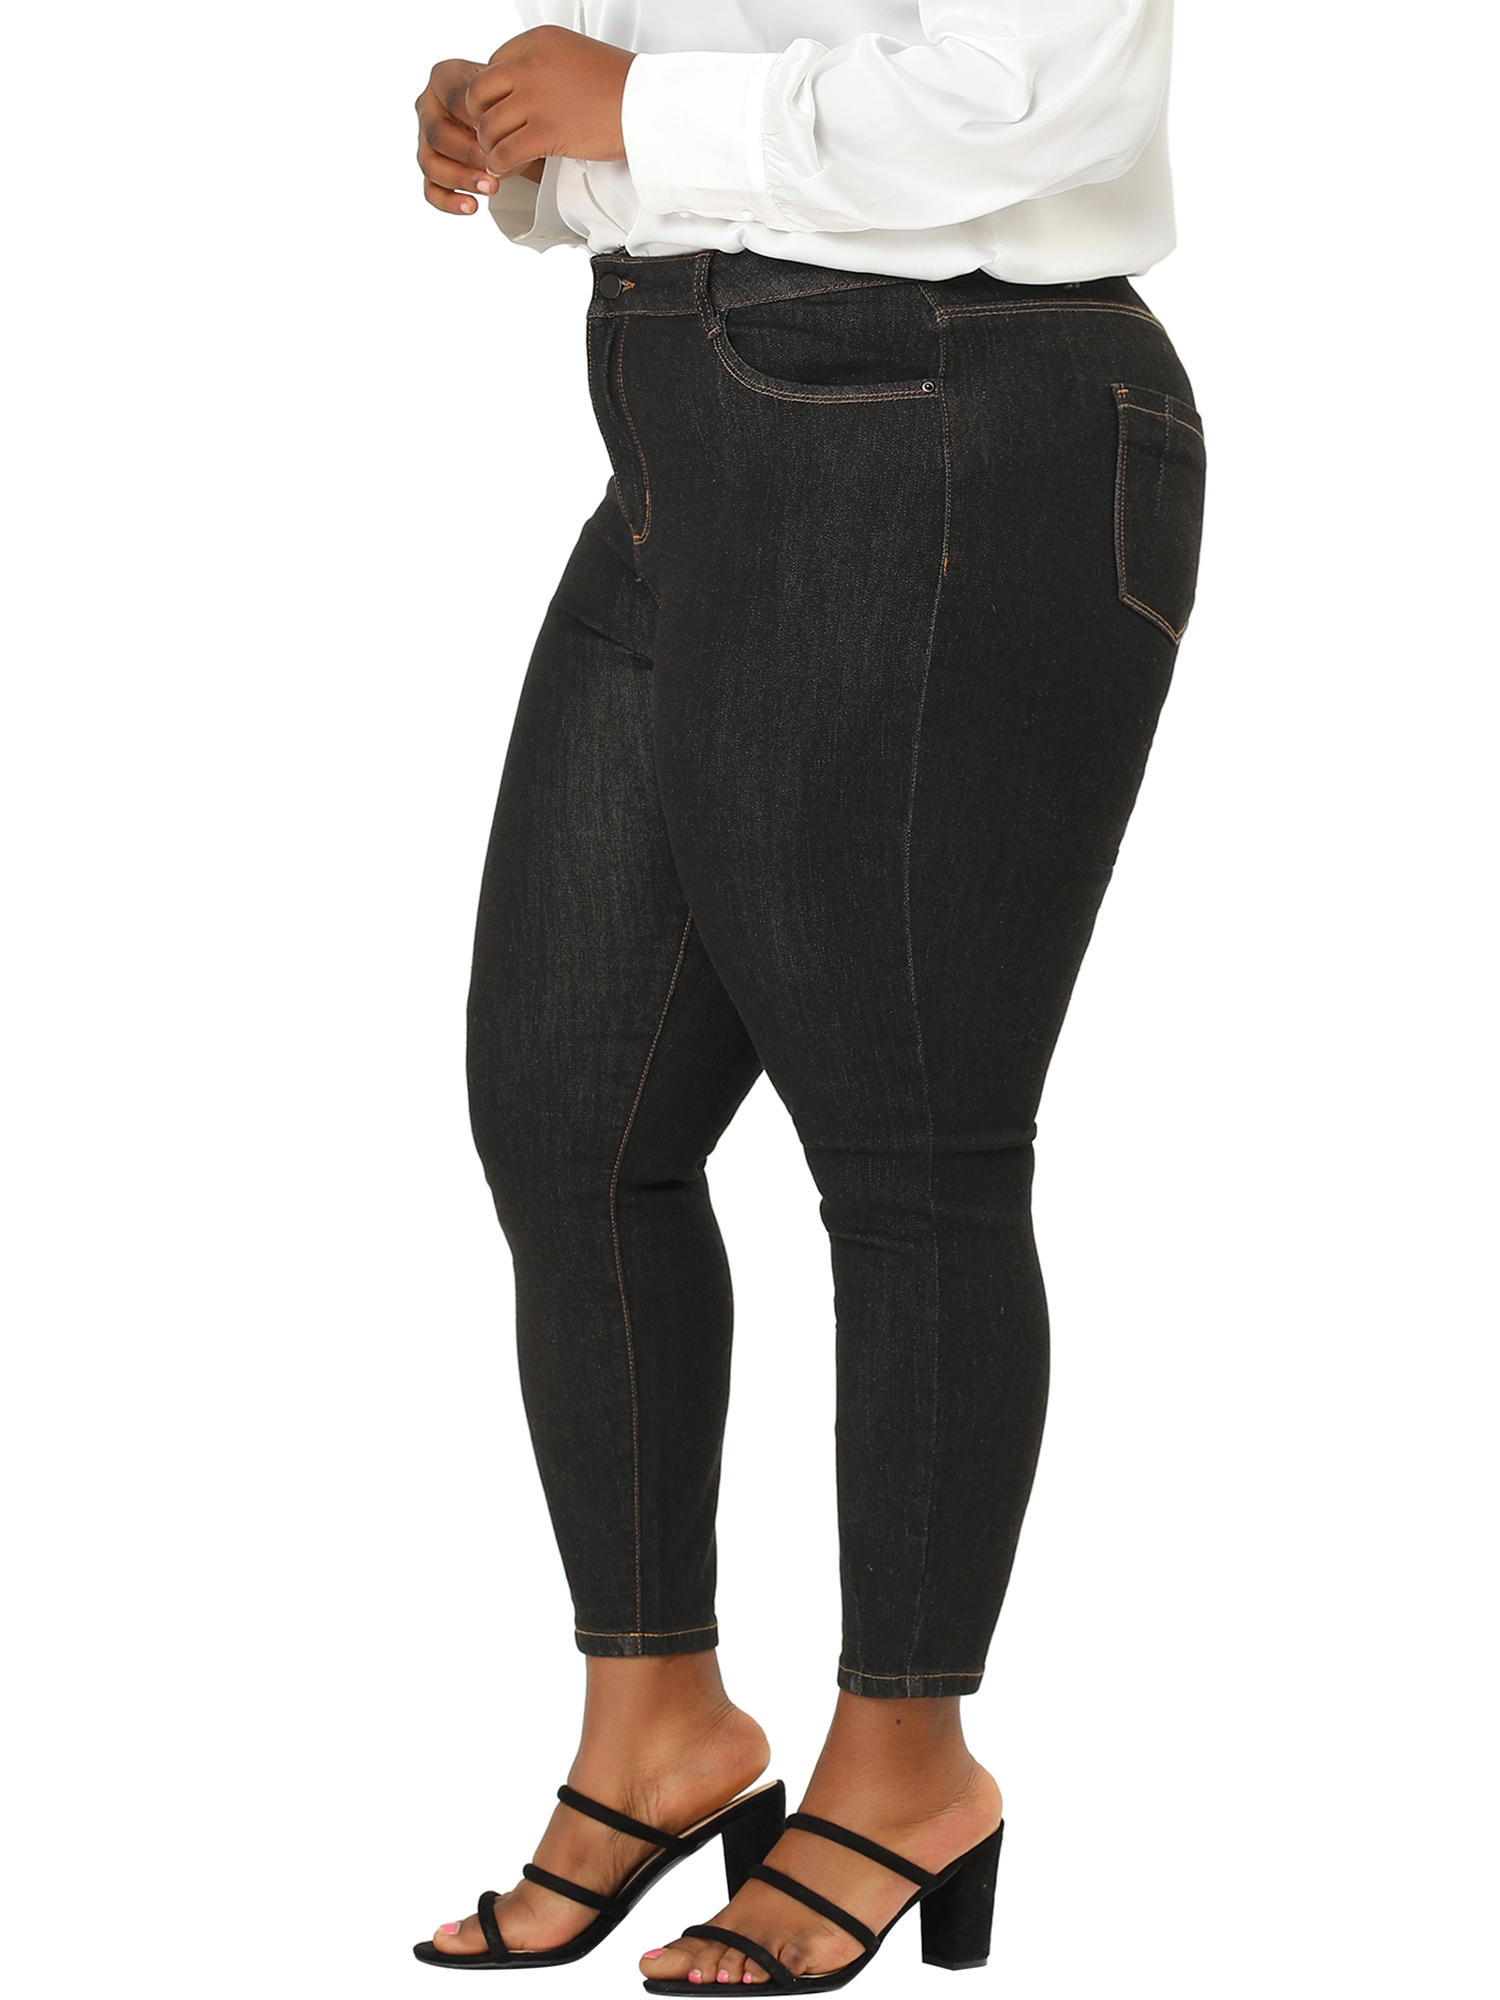 MODA NOVA Junior's Plus Size Jeans Denim Stretch Work Contrast Color Line Skinny Mid Rise Jeans Black 2X - image 5 of 5